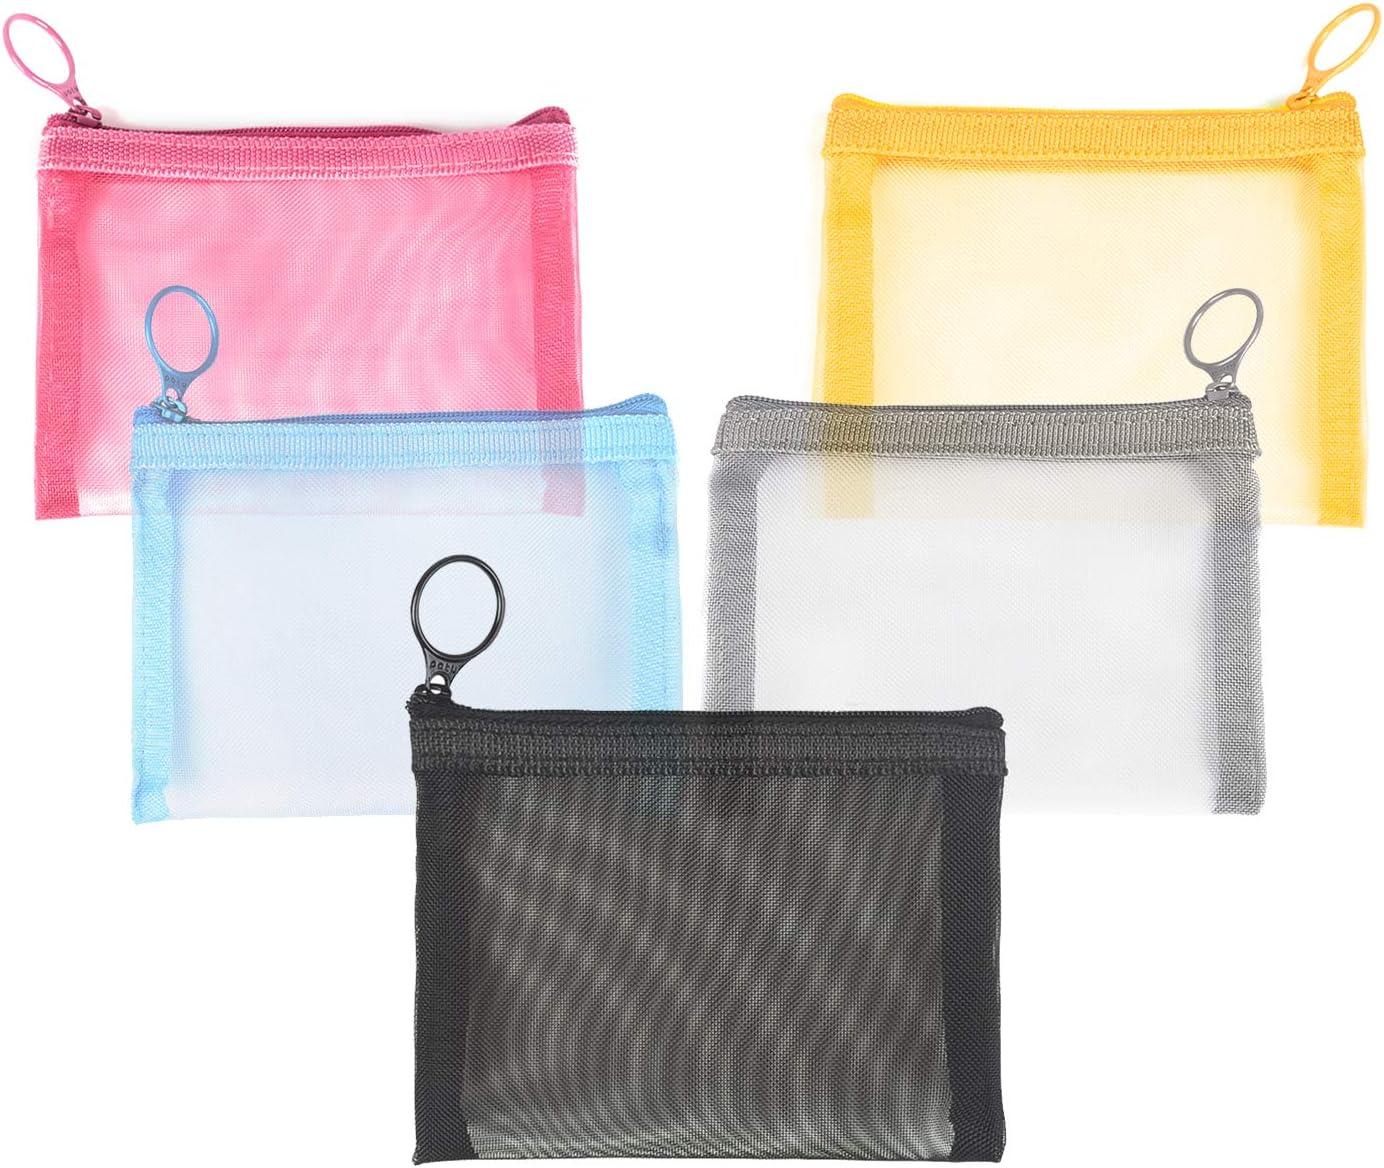 Patu Mini Zipper Mesh Bags, 4 x 5, Size S / A7, 5 Pieces, Beauty Makeup  Lipstick Cosmetic Accessories Organizer, Small Travel Kit Storage Pouch,  Assorted Colors S (5 pcs)